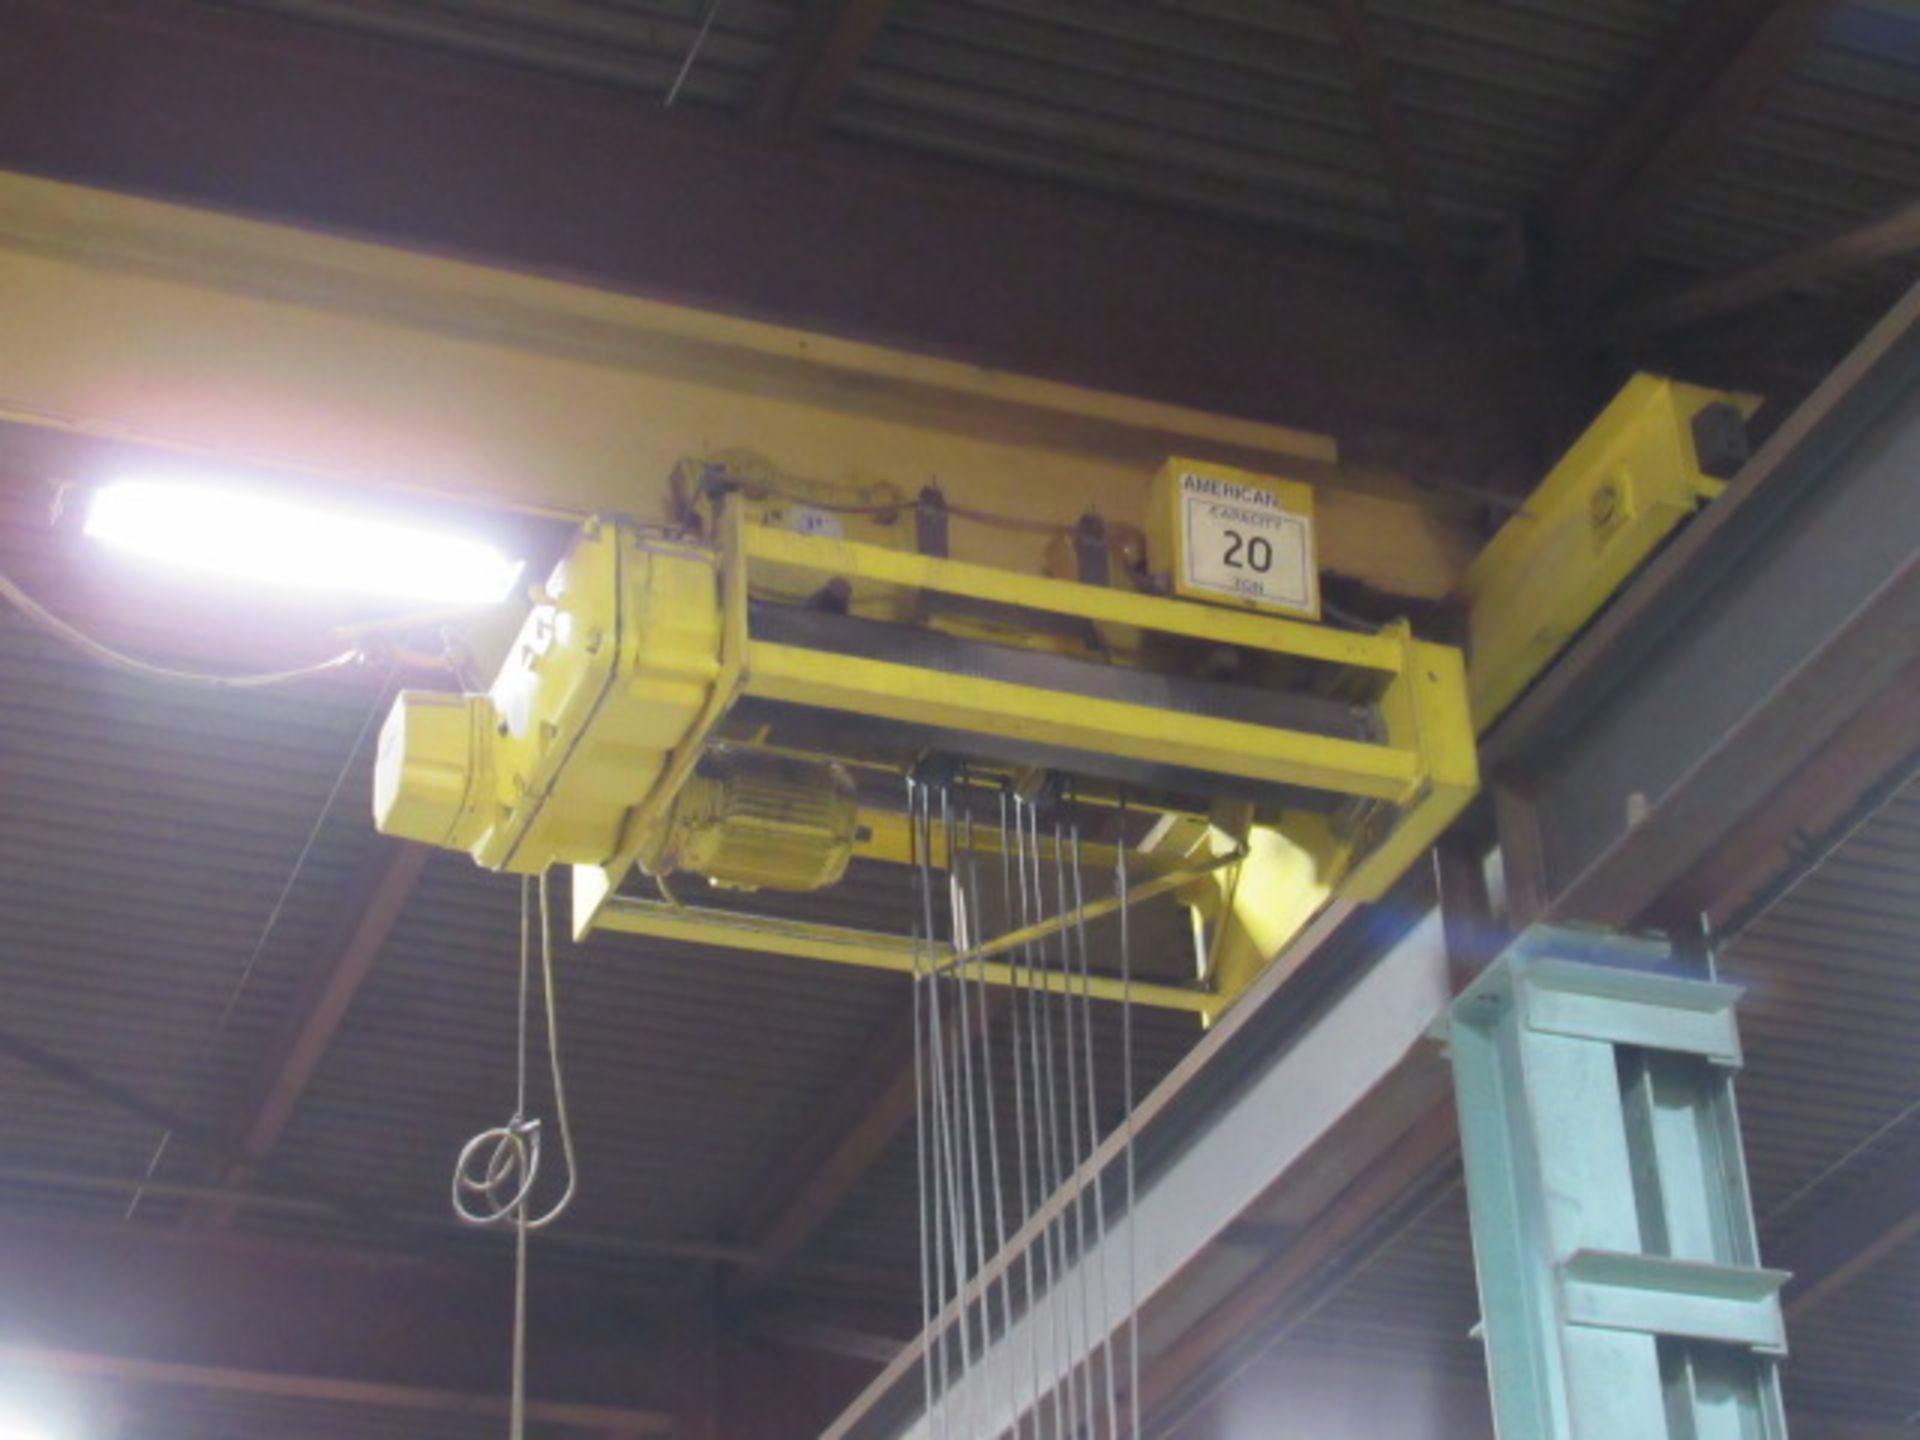 North American 20 Ton Overhead Crane - Image 4 of 7